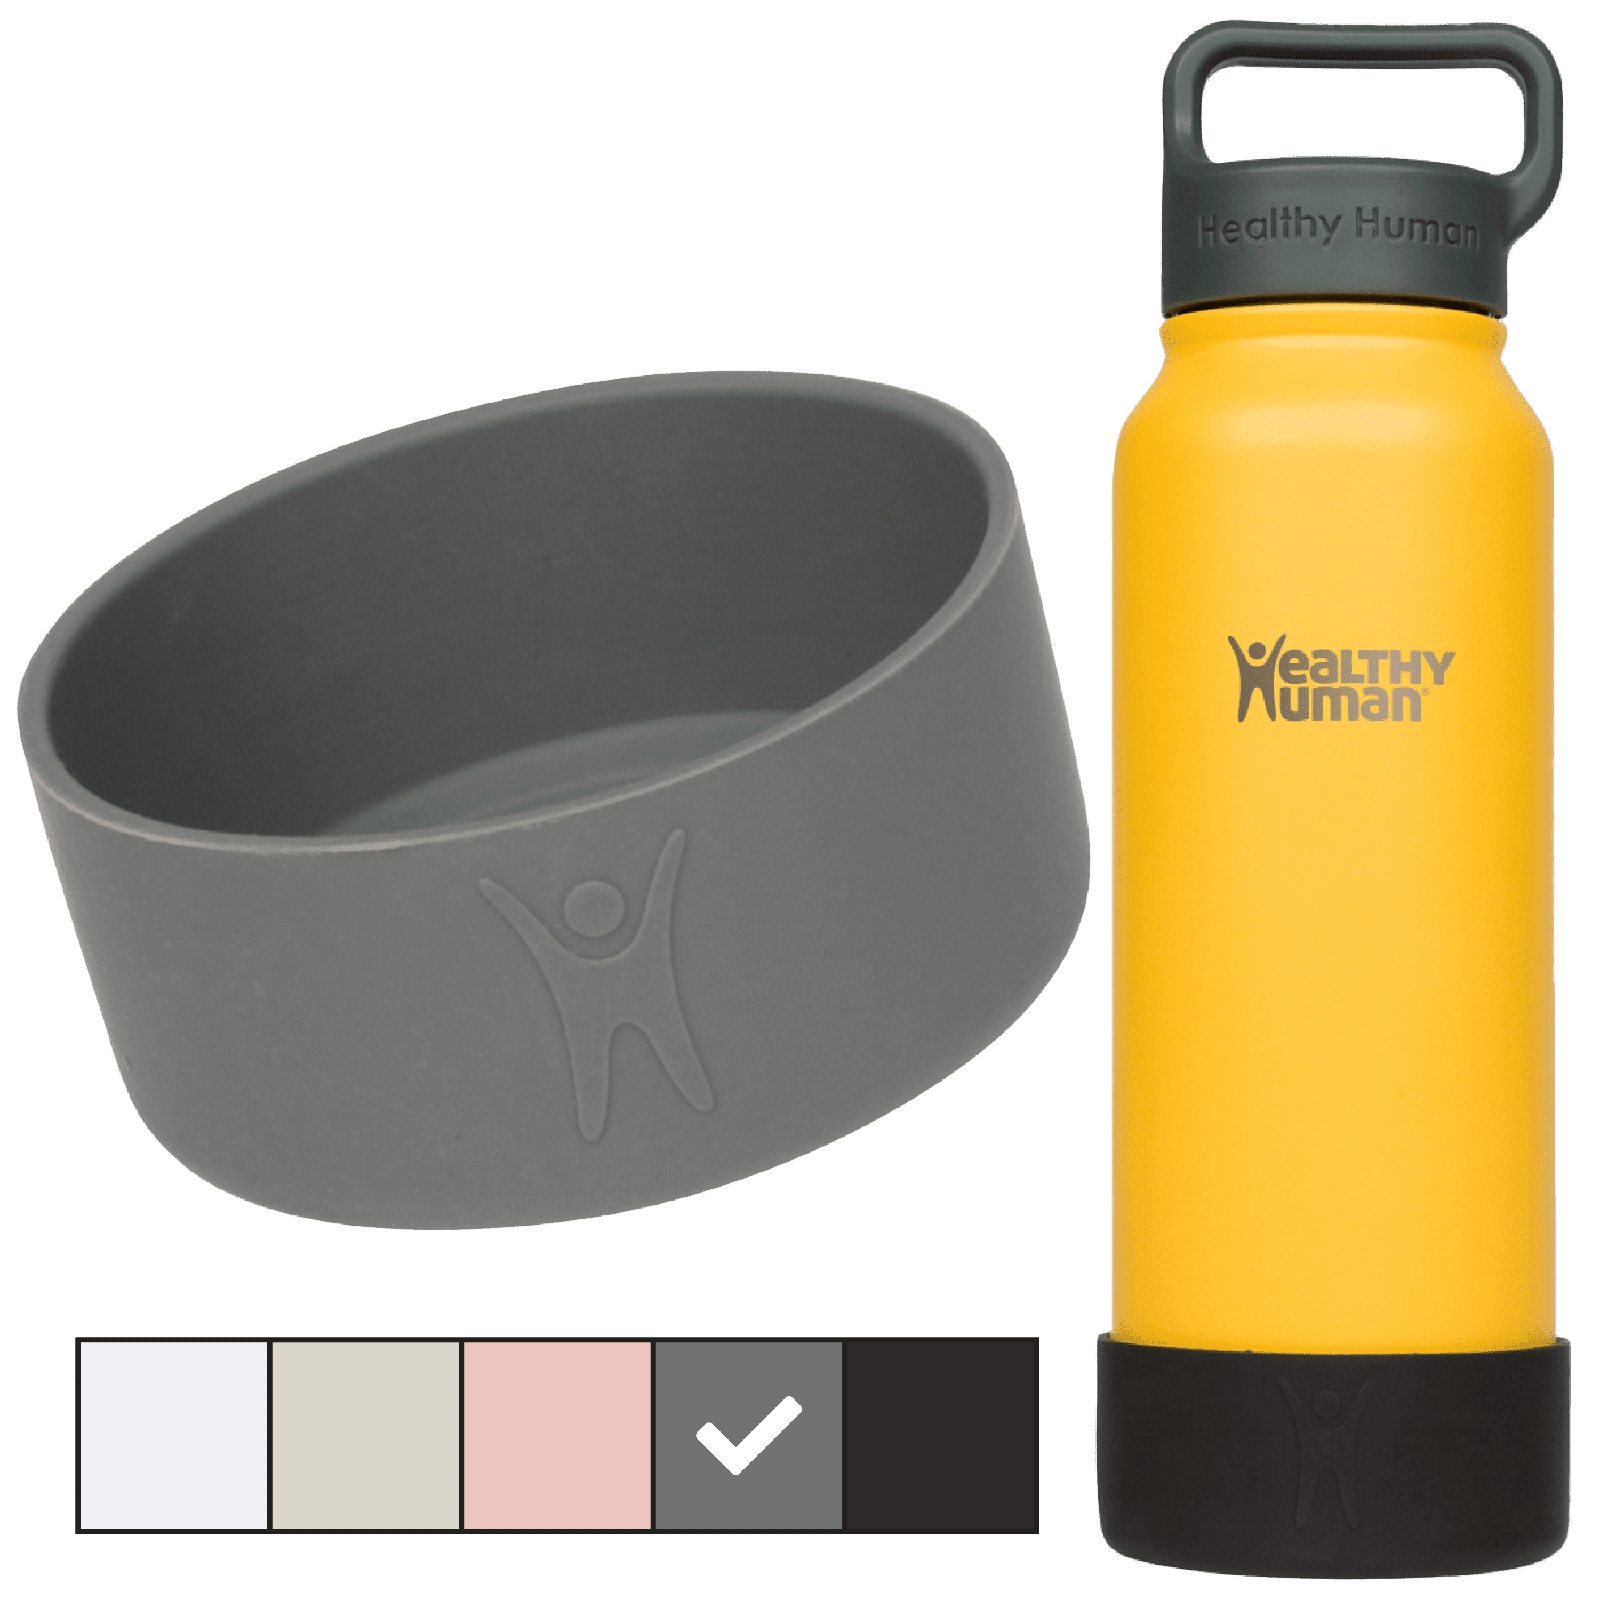 Non-slip Silicone Cup Boot, Reusable Cup Bottom Protector Sleeve